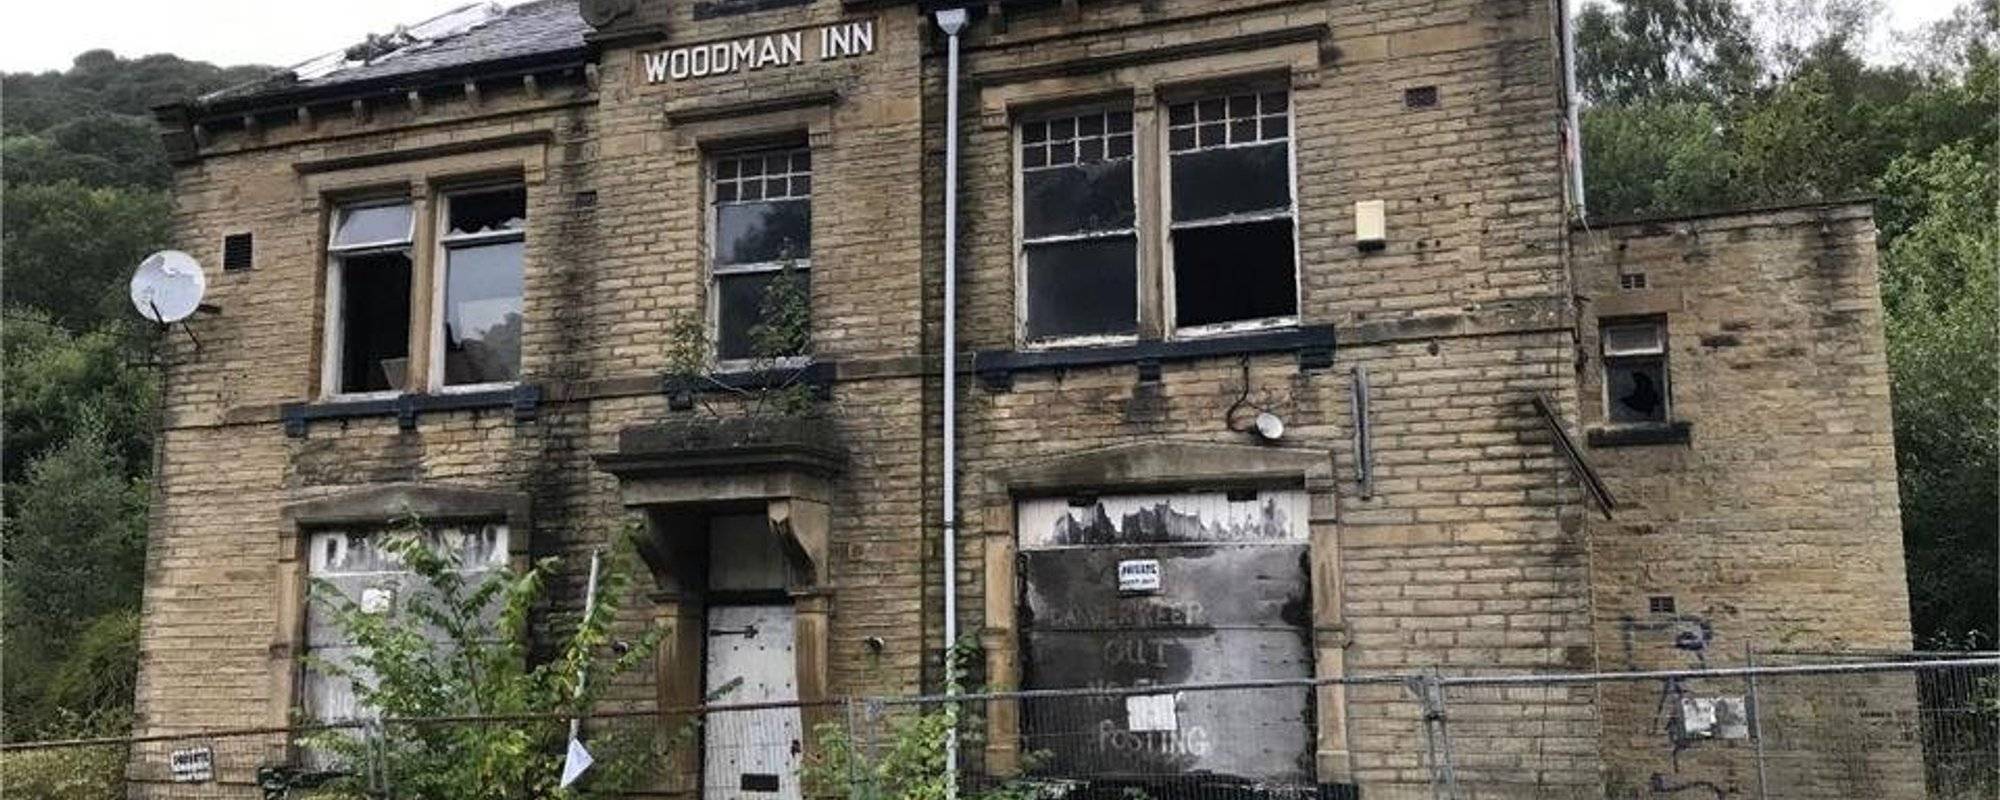 Tales of the Urban Explorer: The Woodman Inn